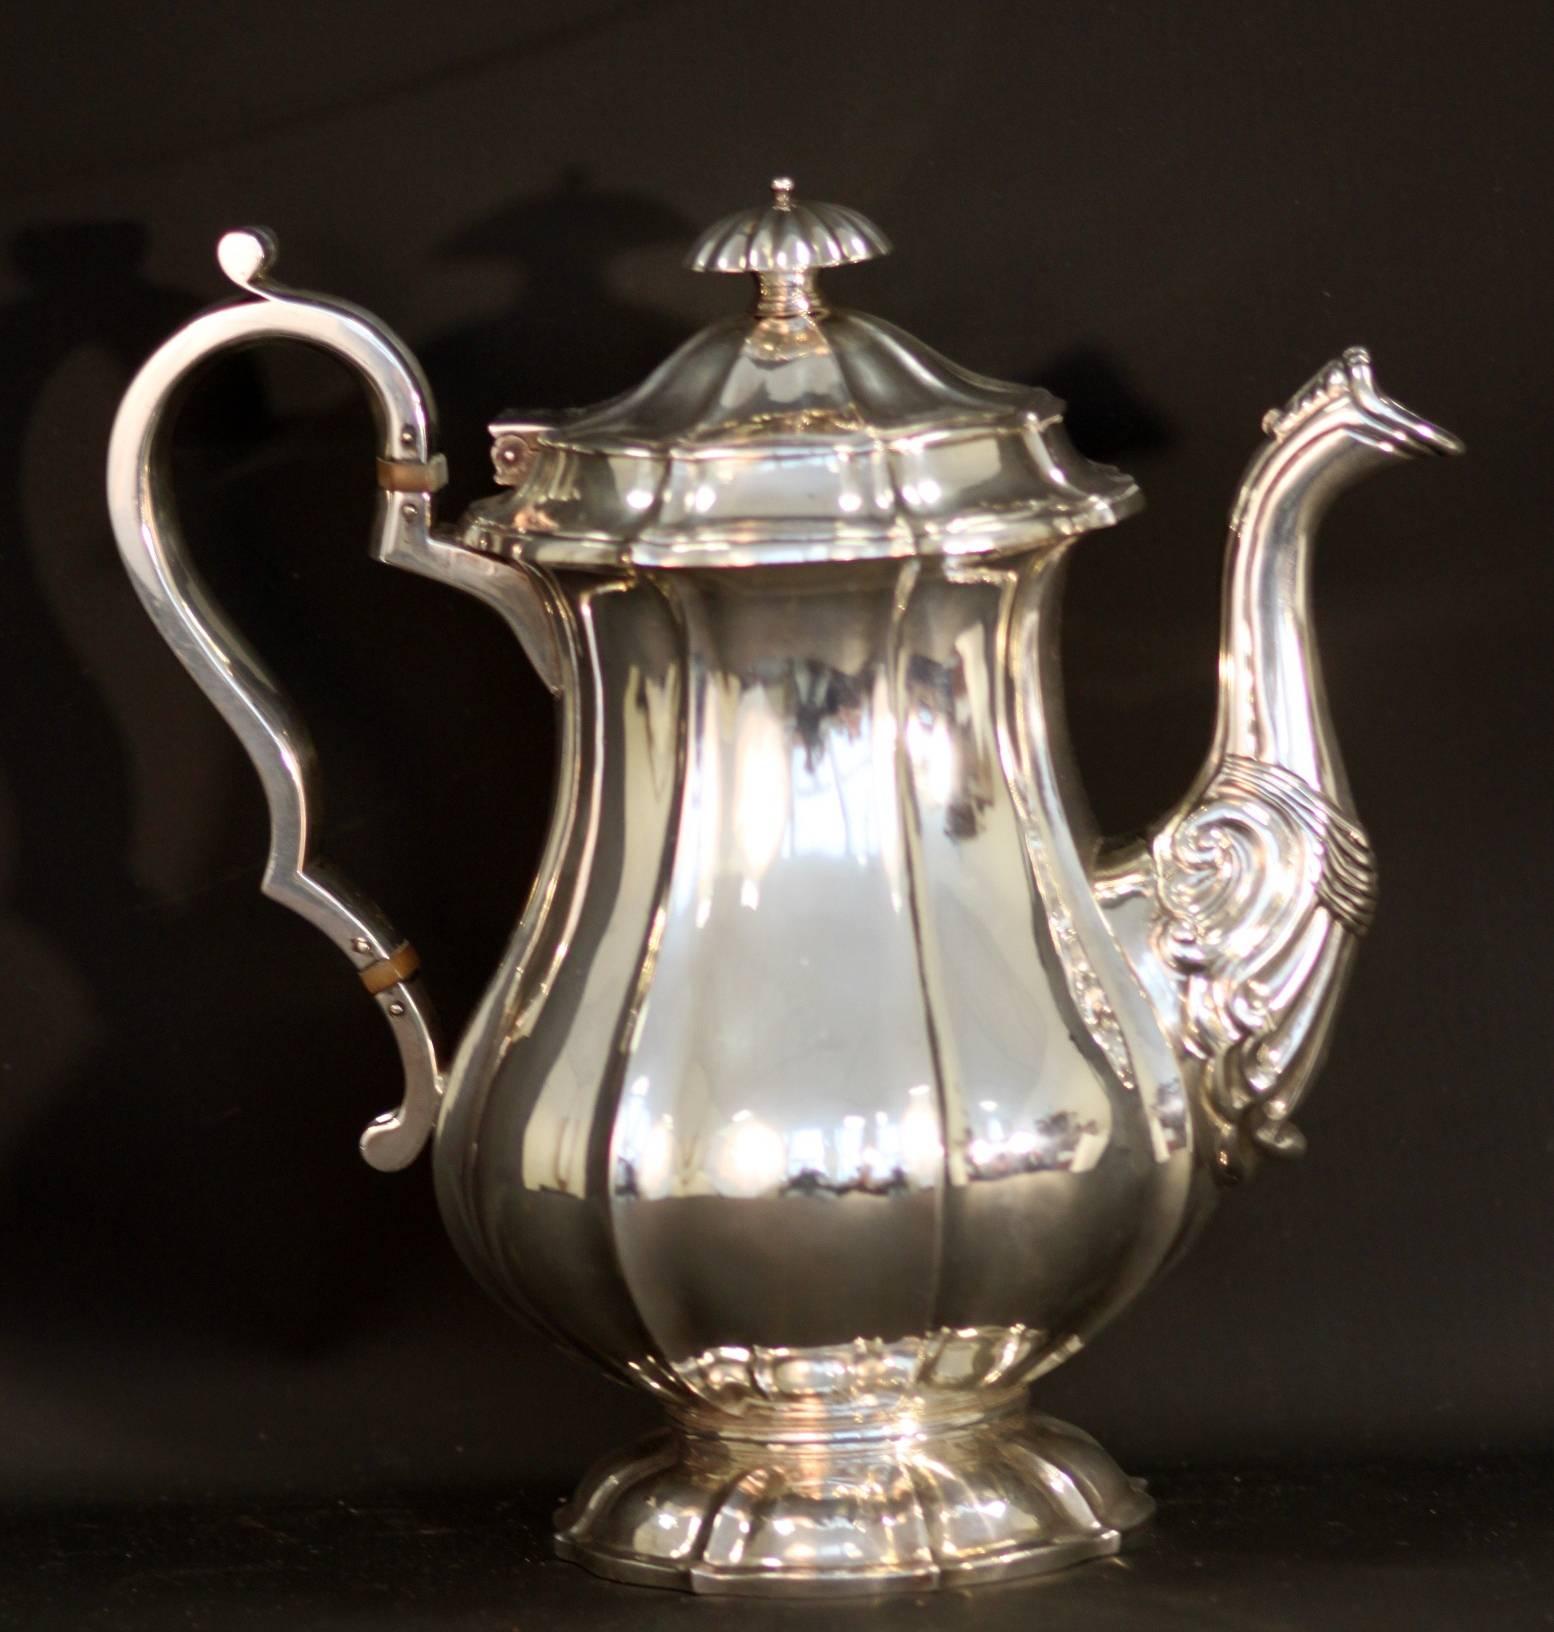 Georgian solid silver tea set
Made in Dublin 1834
Maker : Richard Sawyer
Fully hallmarked.

Dimensions -

Coffee pot
Size : 23.3 x 12.7 x 22.5 cm
Weight : 872 grams

Tea pot
Size : 28.5 x 19 x 16.2 cm
Weight : 905 grams

Sugar bowl